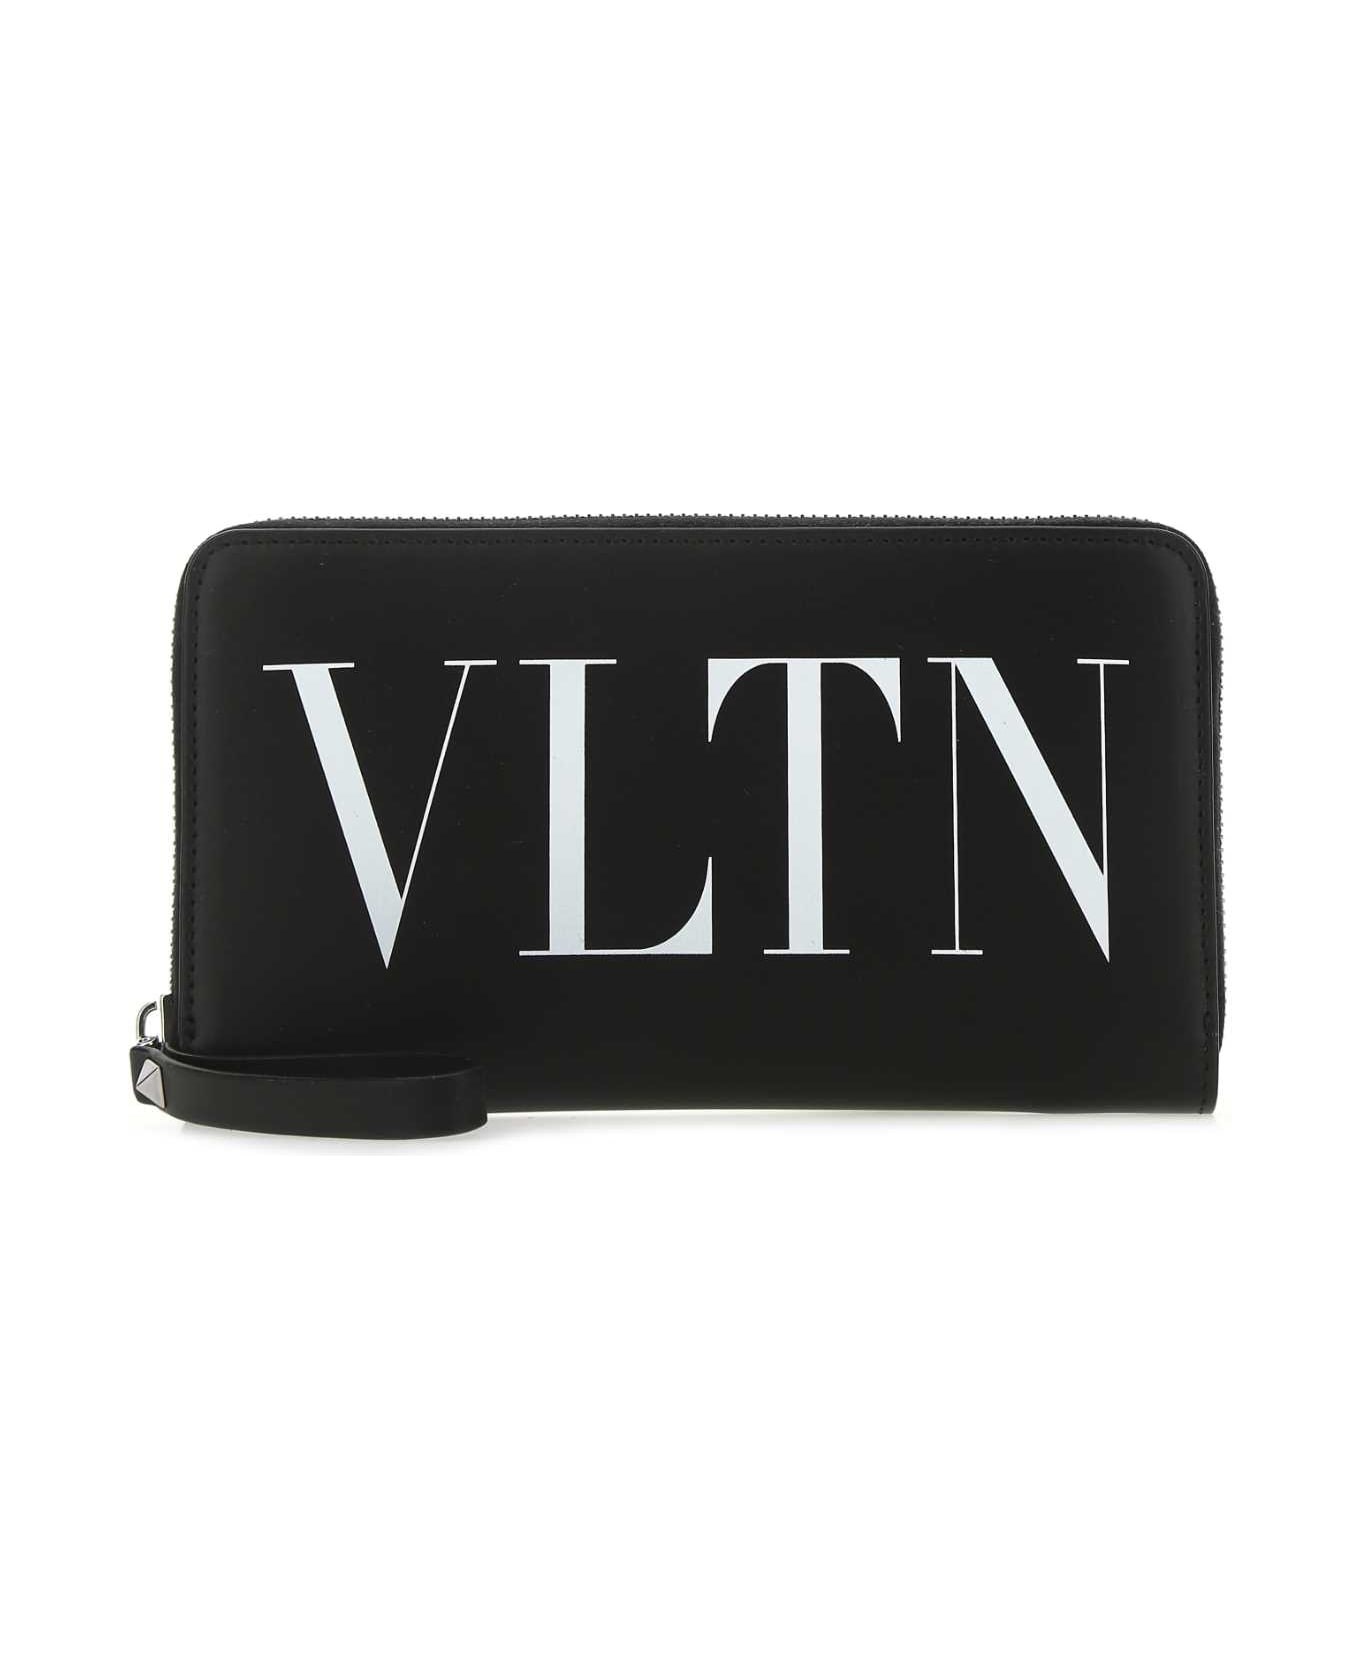 Valentino check Garavani Black Leather Vltn Wallet - NEROBIANCO